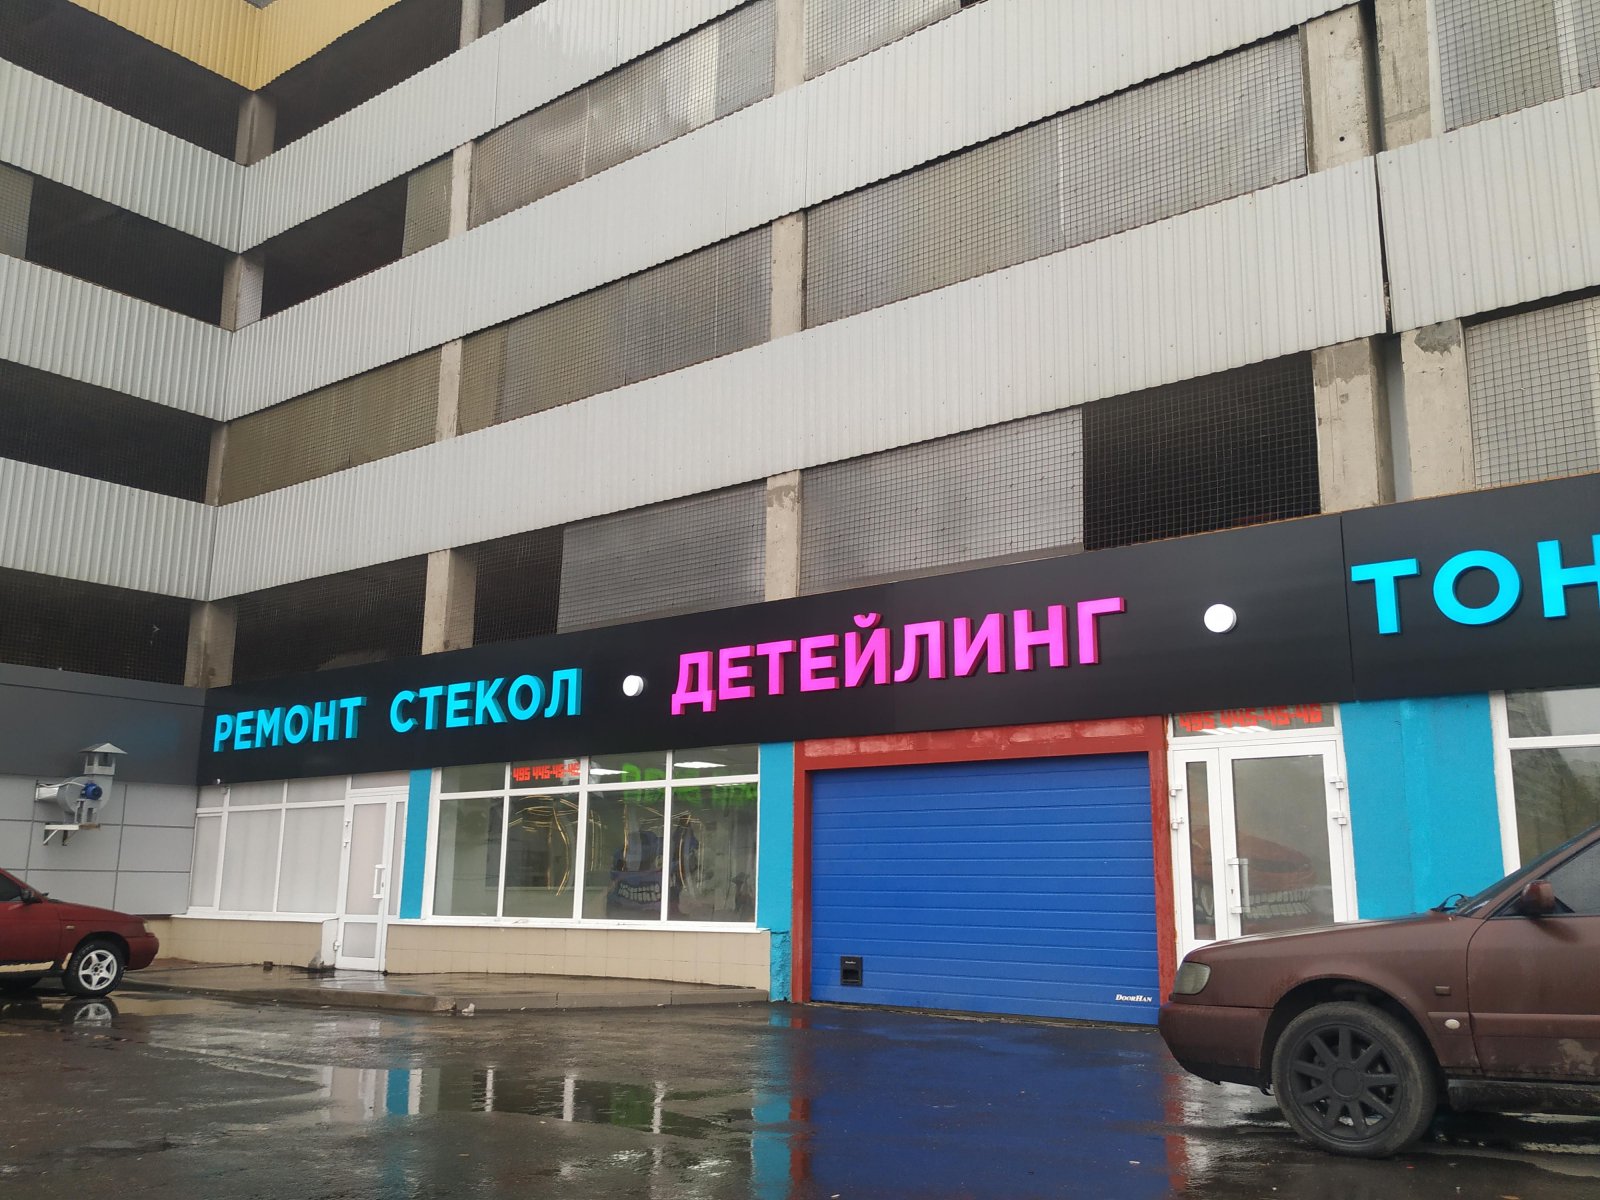 Moscow detailing, детейлинг-центр, улица Поляны, 22, 1 этаж